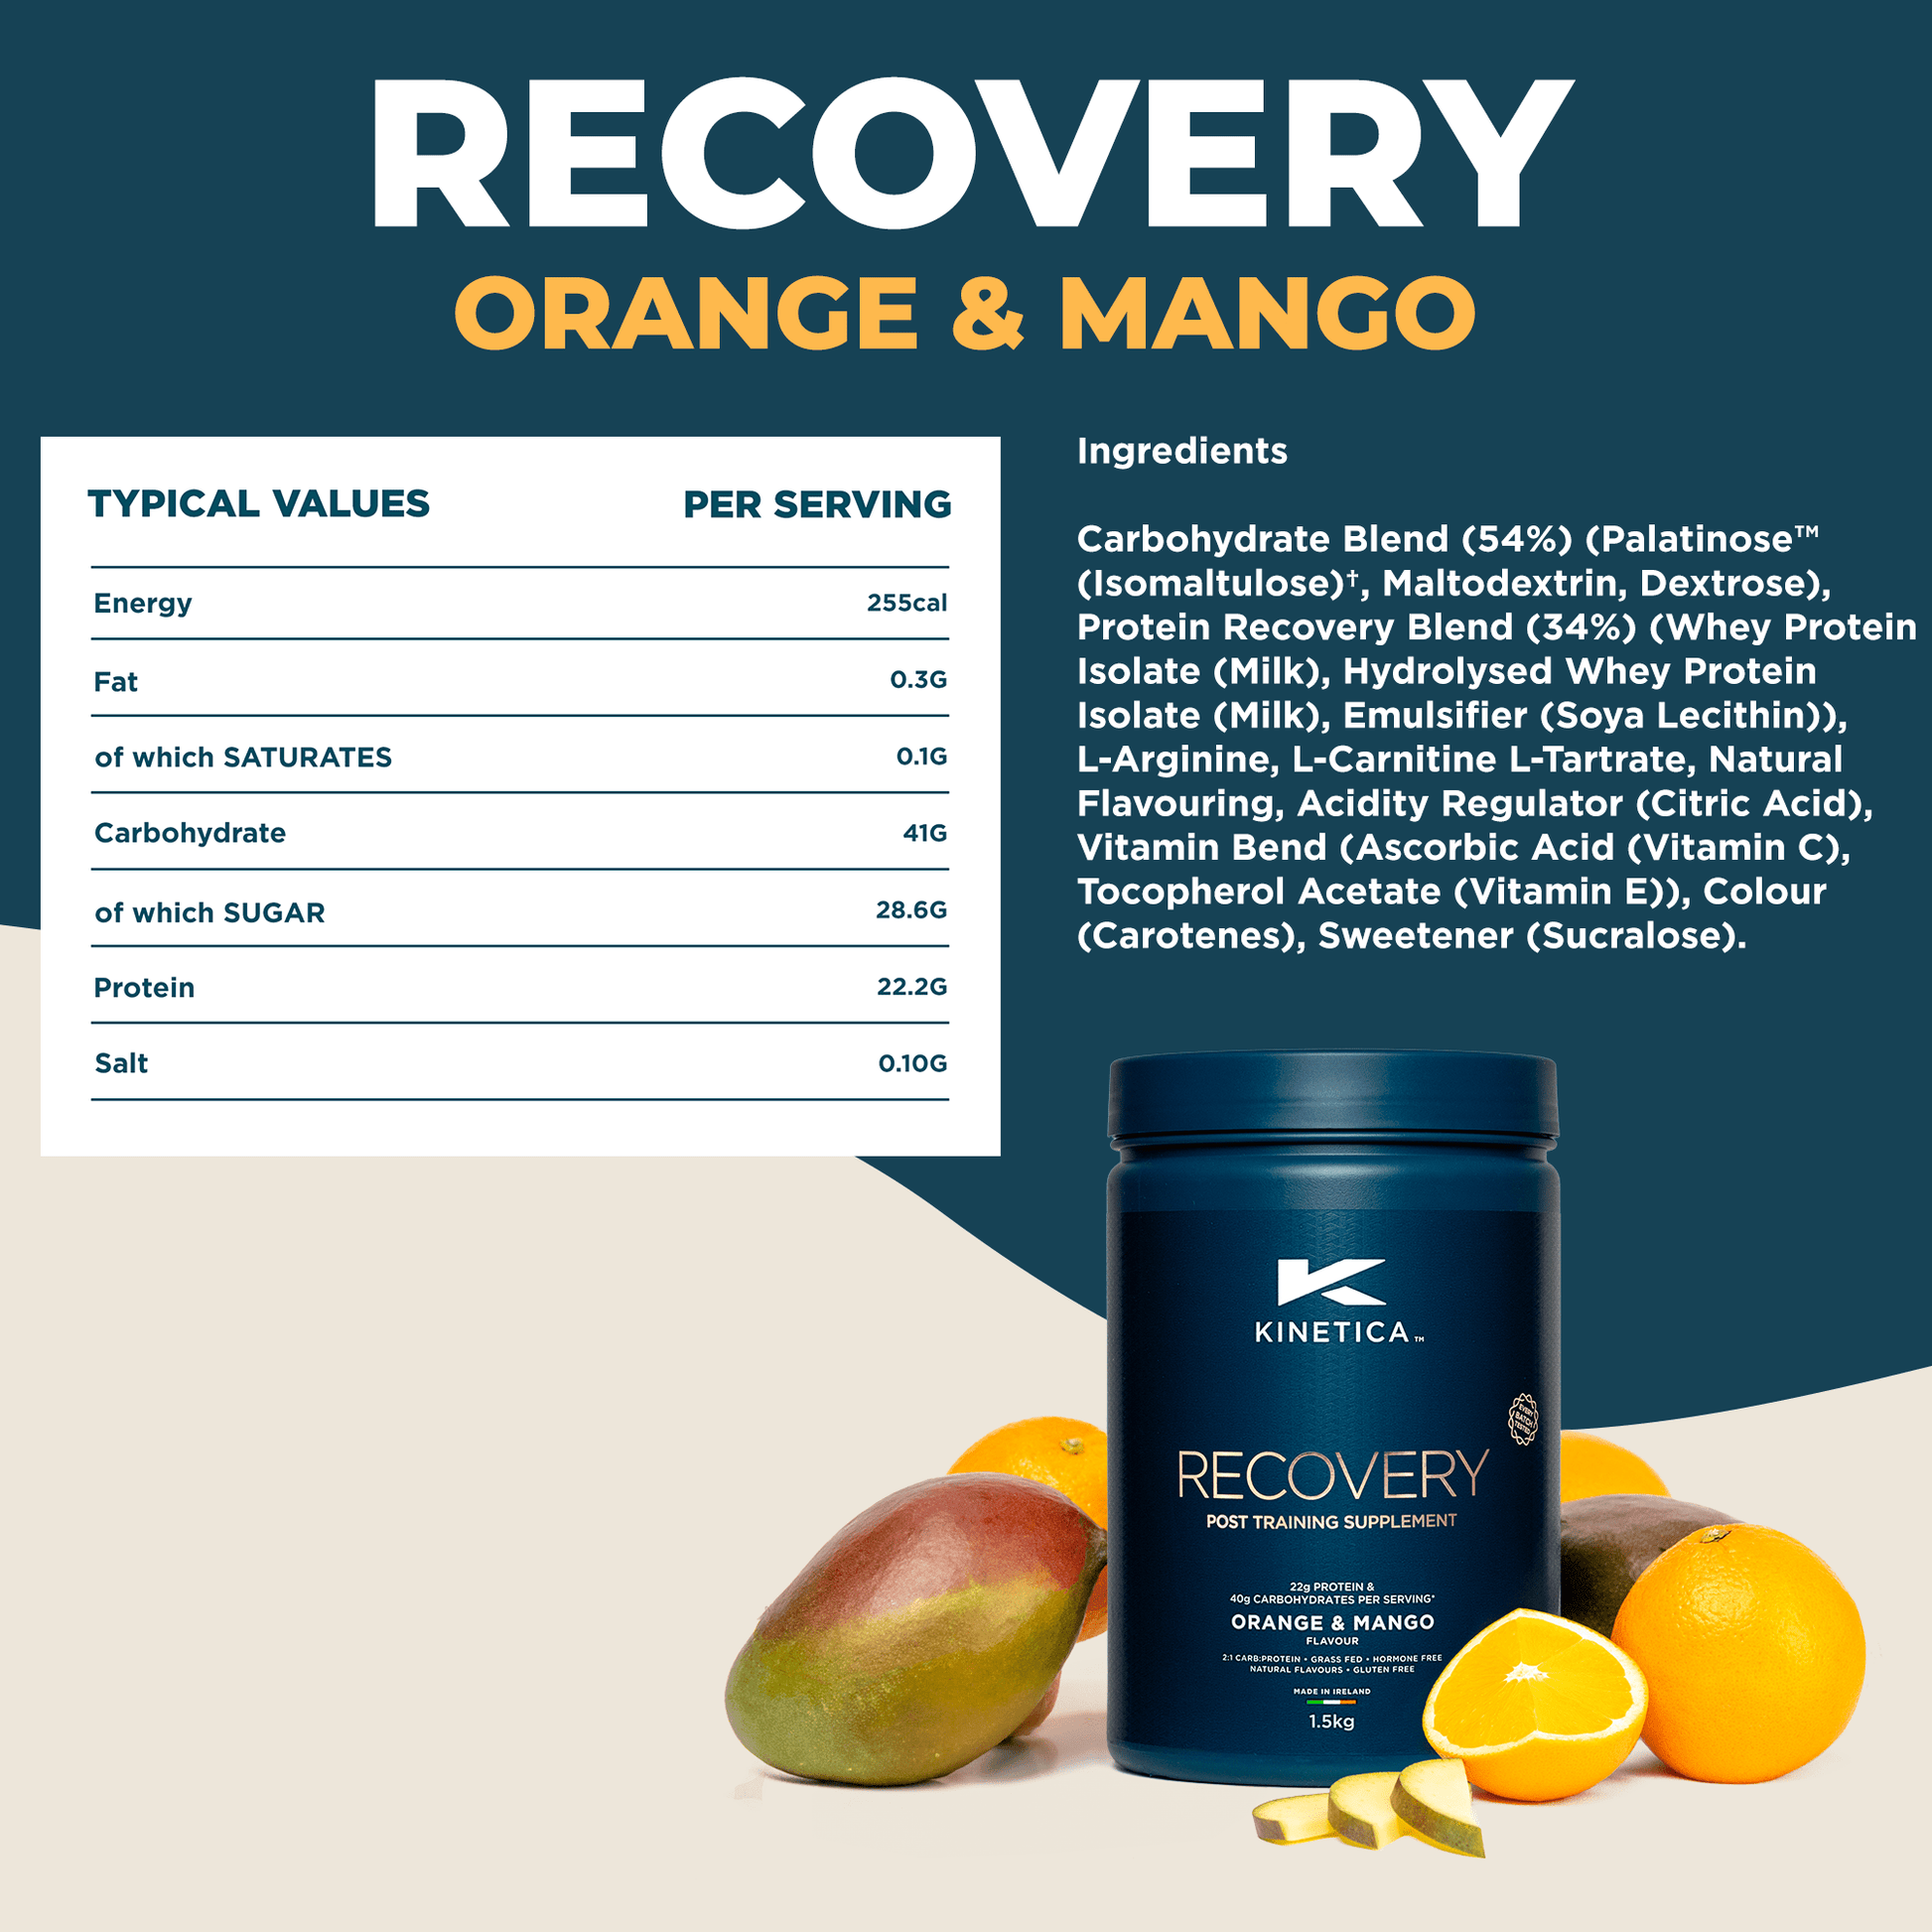 Recovery Orange & Mango Nutritional Information